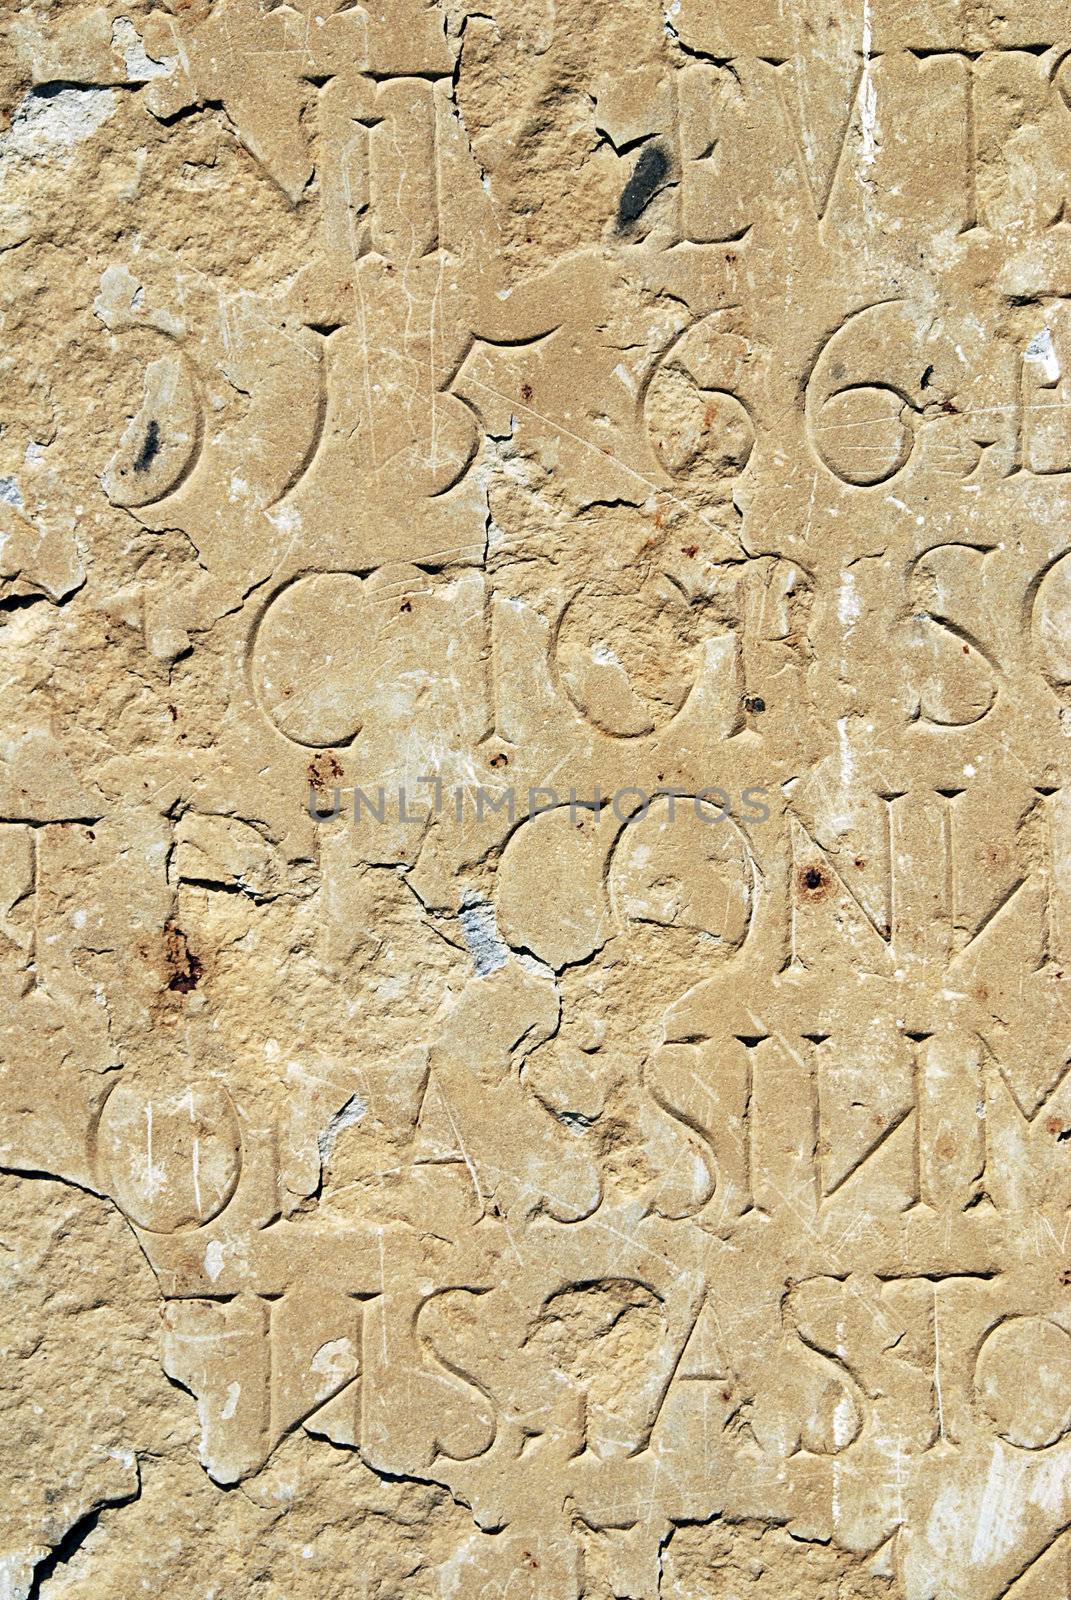 Ancient latin inscription - vintage written background